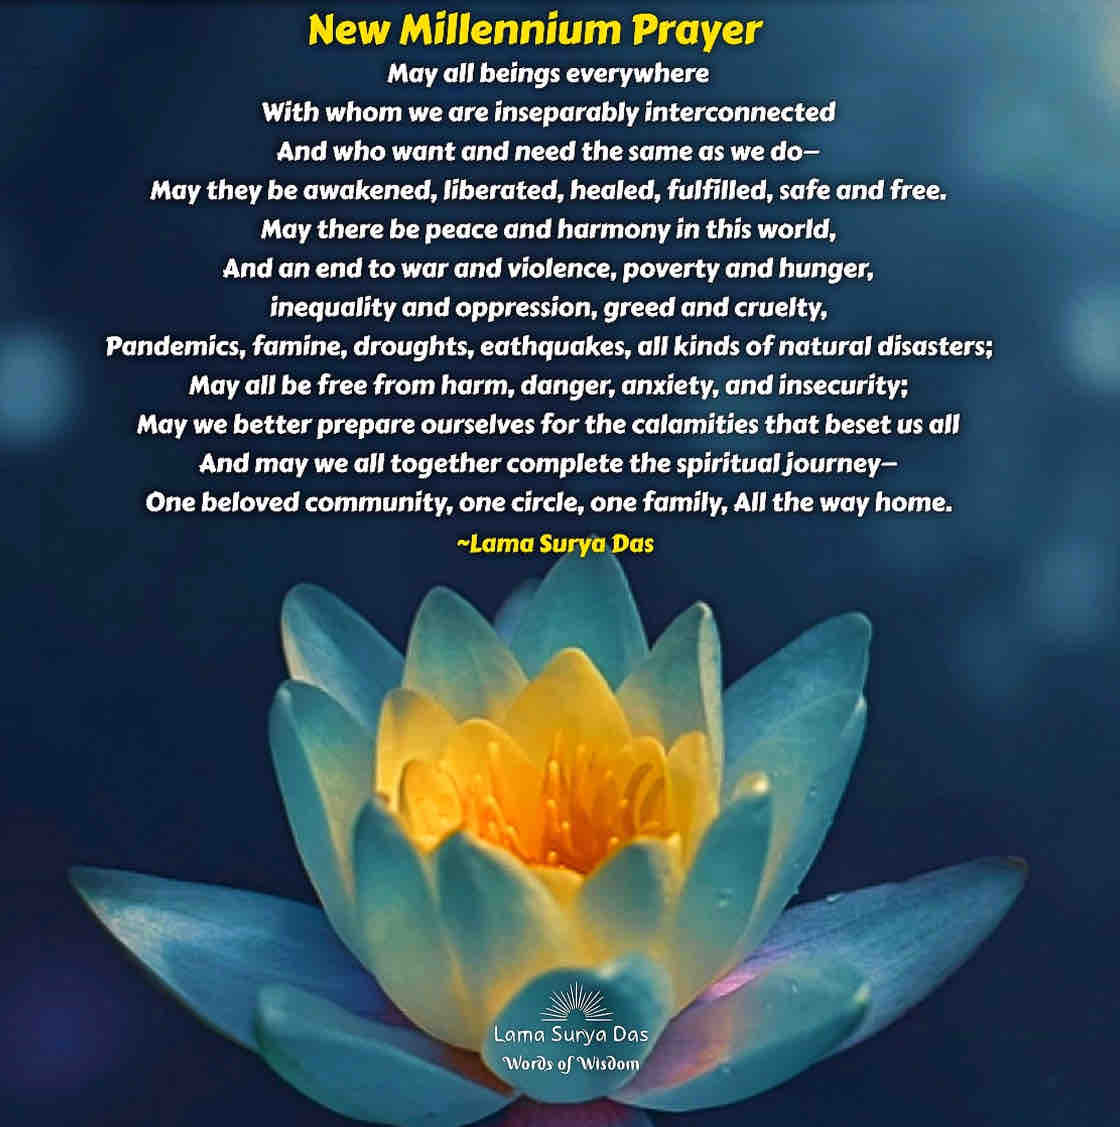 Please join in prayer for all beings everywhere. 

#LamaSuryaDas #NewMillenniumPrayer #Dzogchen #Meditation #SelfInquiry #Mindfulness #Wellness #Healing #AwakeningtheBuddhaWithin